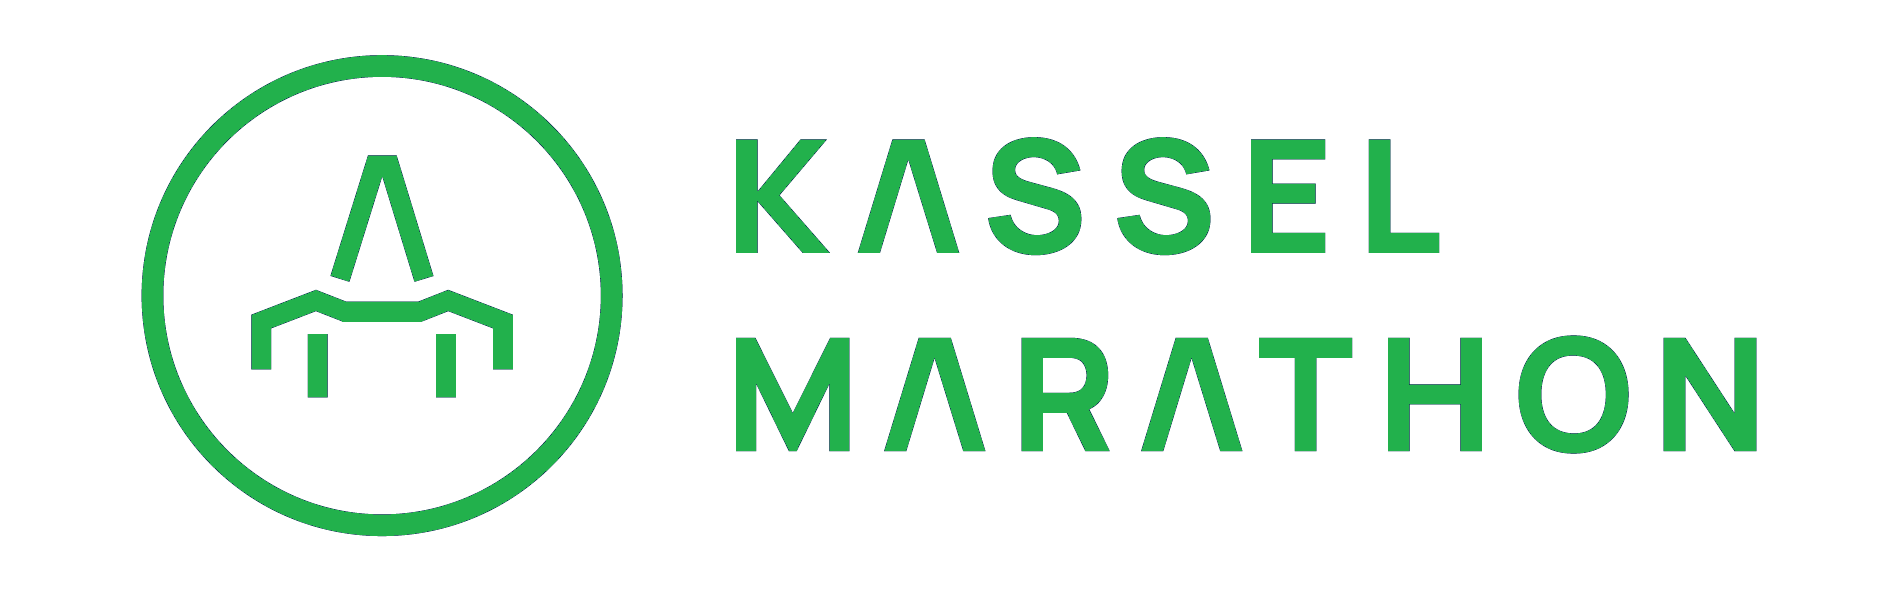 Kassel Marathon LOGO